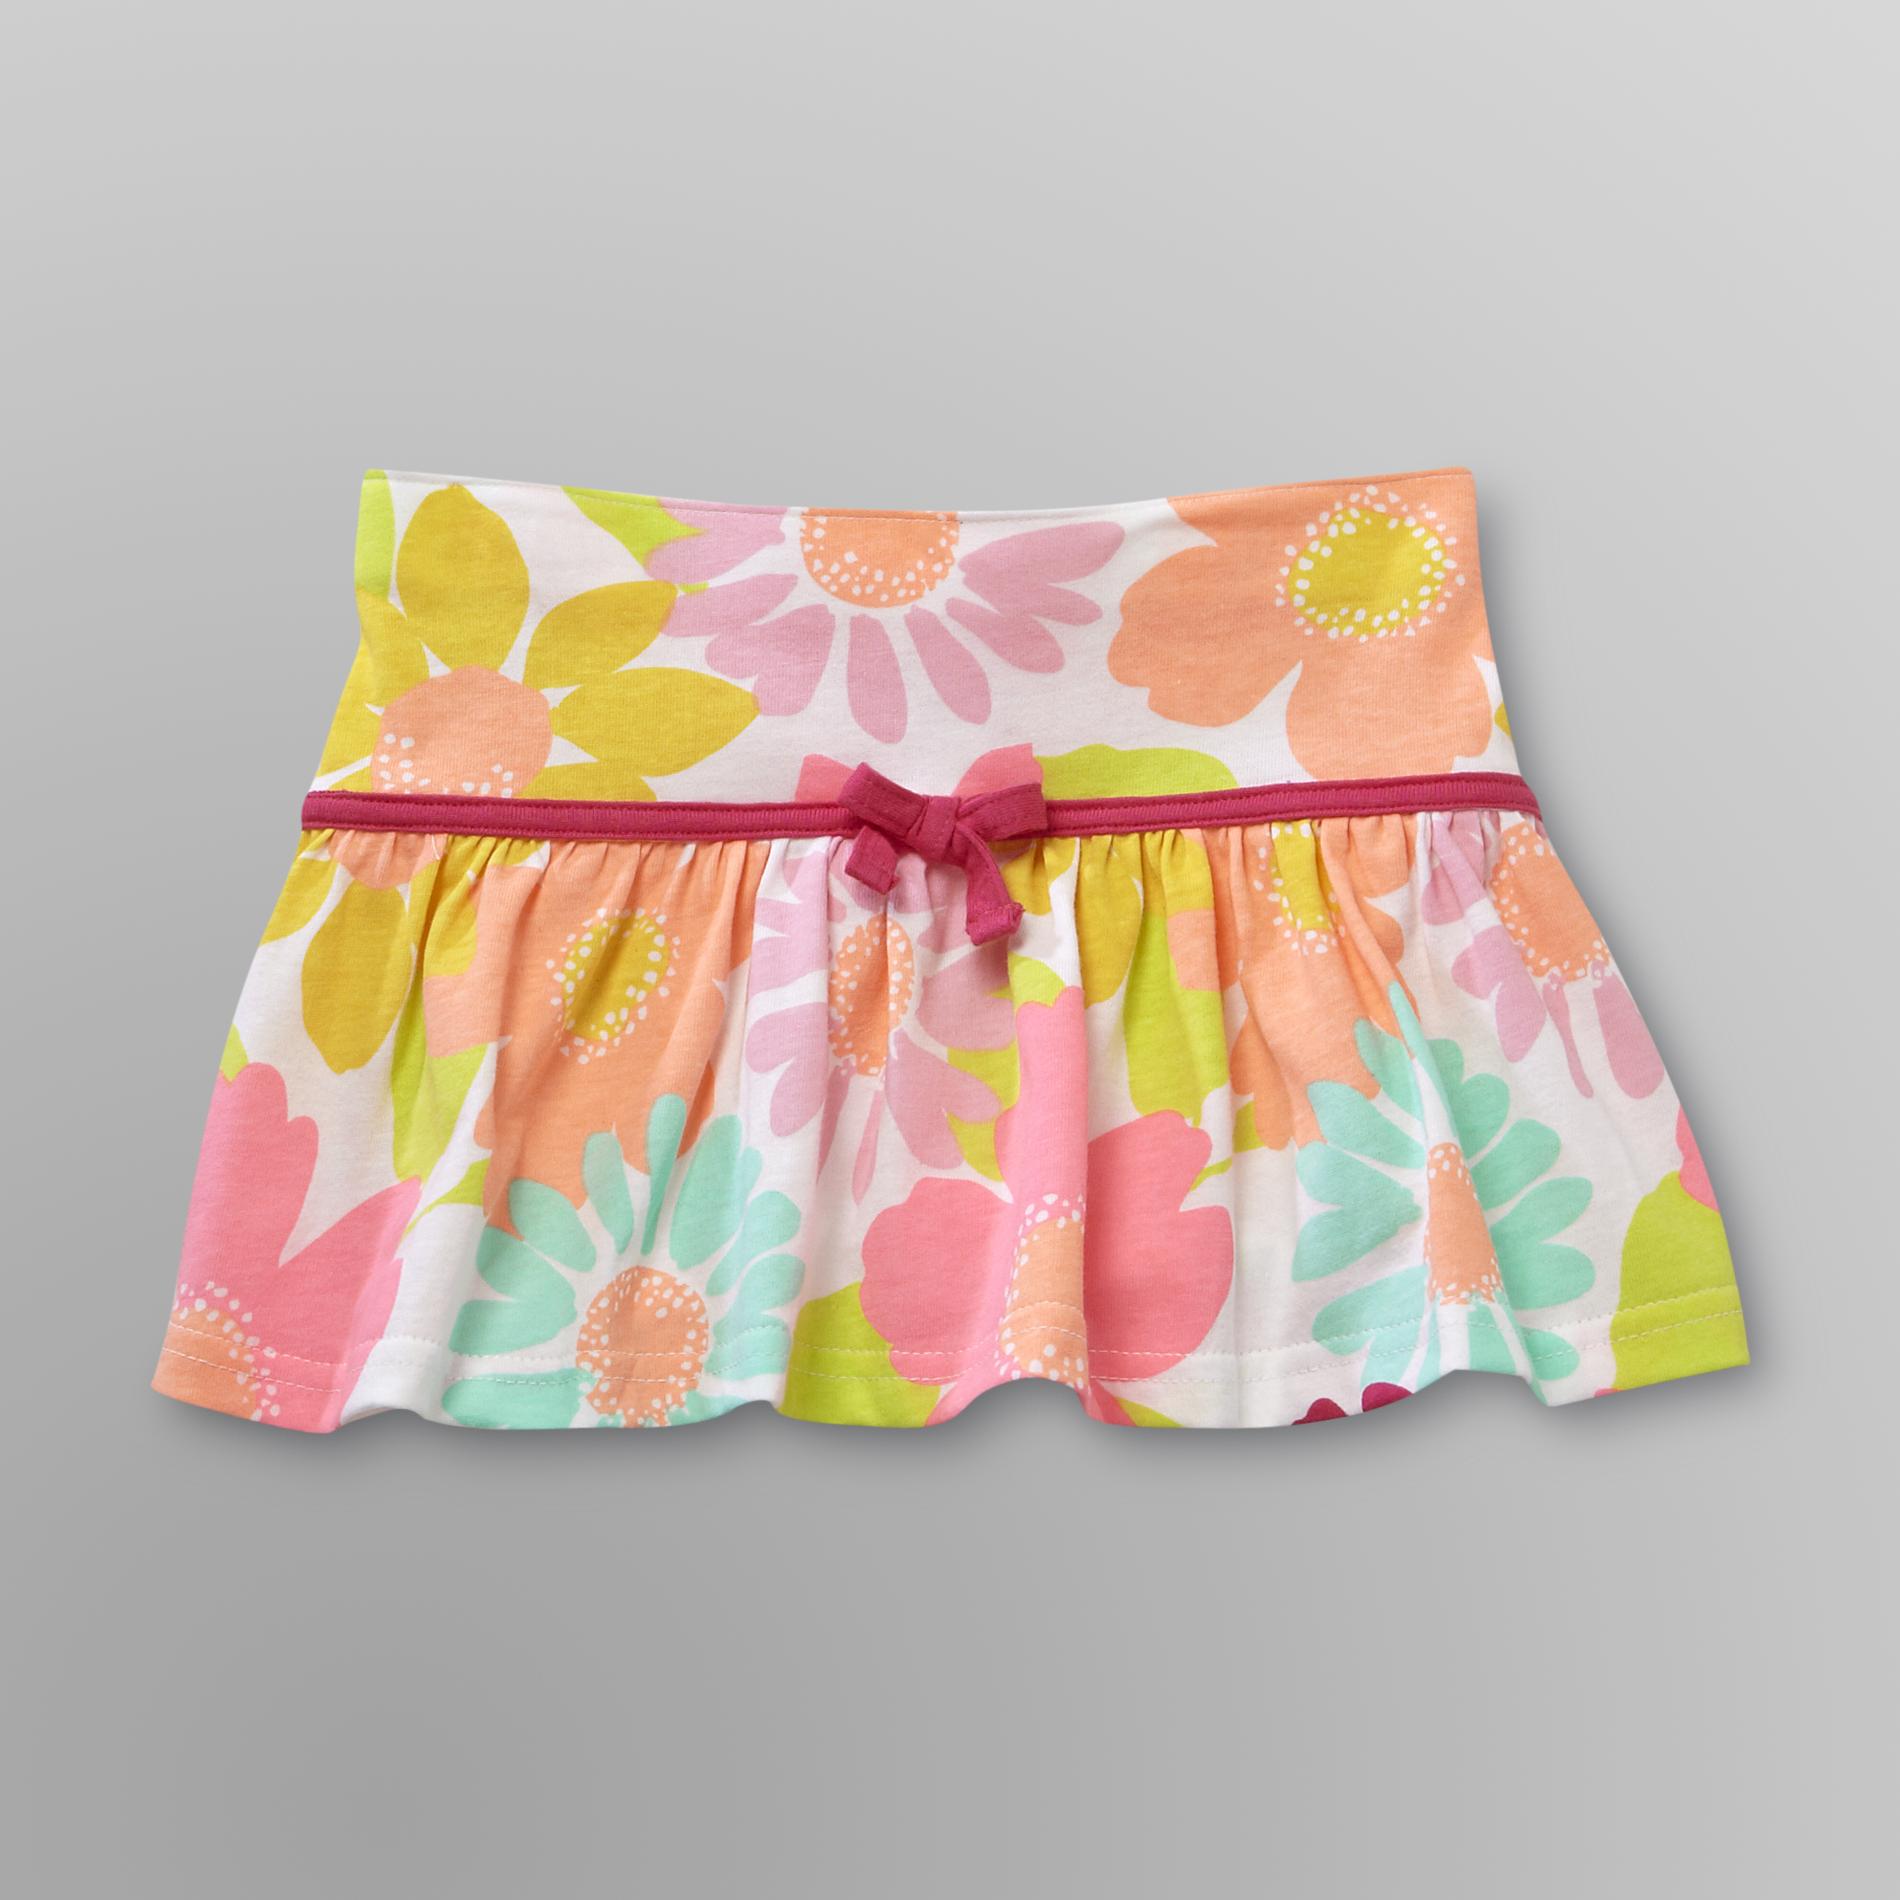 WonderKids Infant & Toddler Girl's Knit Skirt- Floral